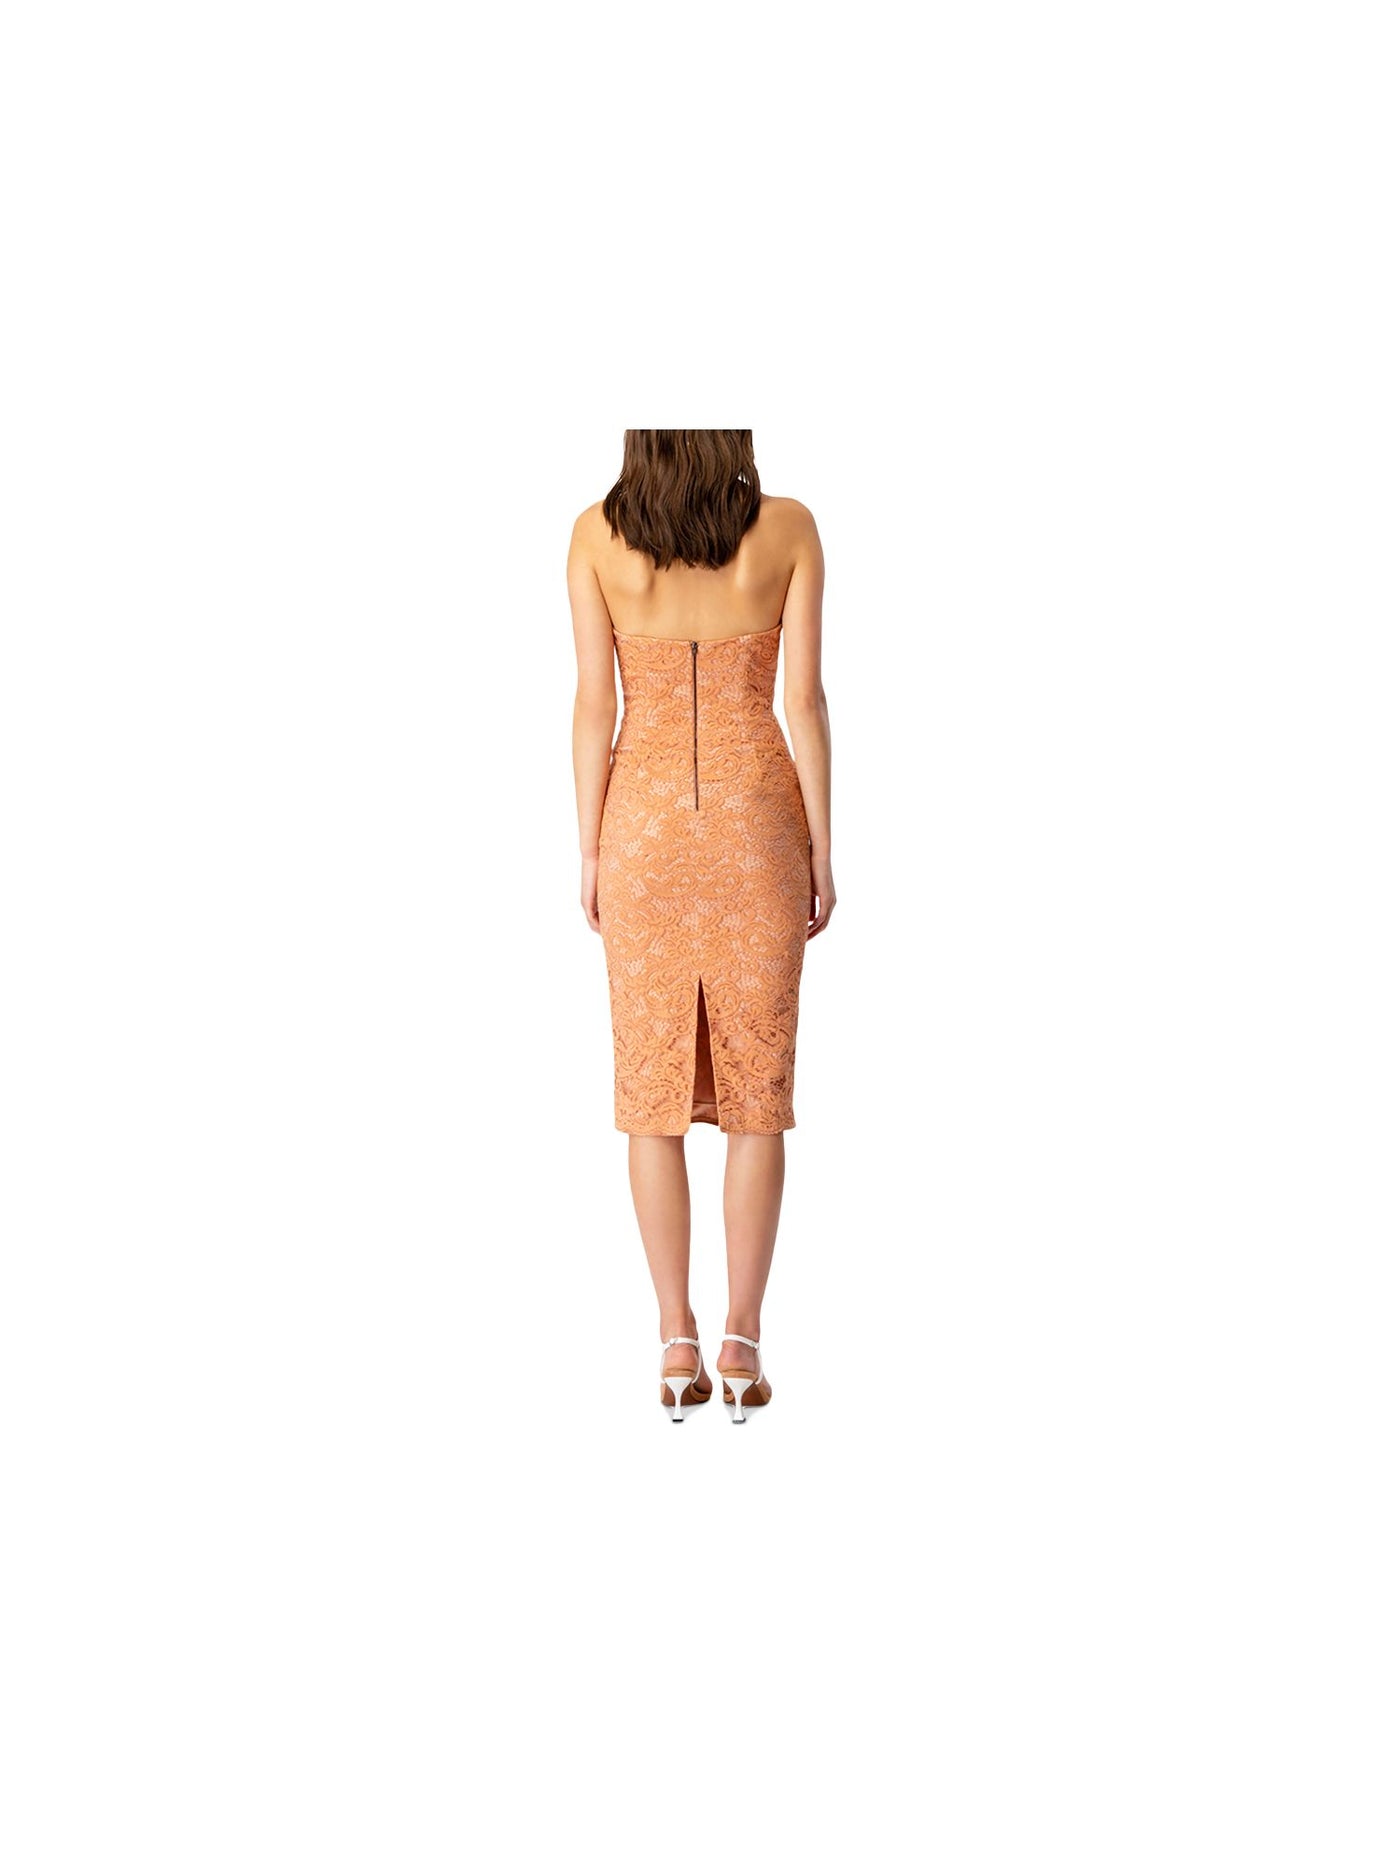 BARDOT Womens Orange Slitted Zippered Corset Boning Lined Lace Sleeveless Halter Below The Knee Evening Sheath Dress XS